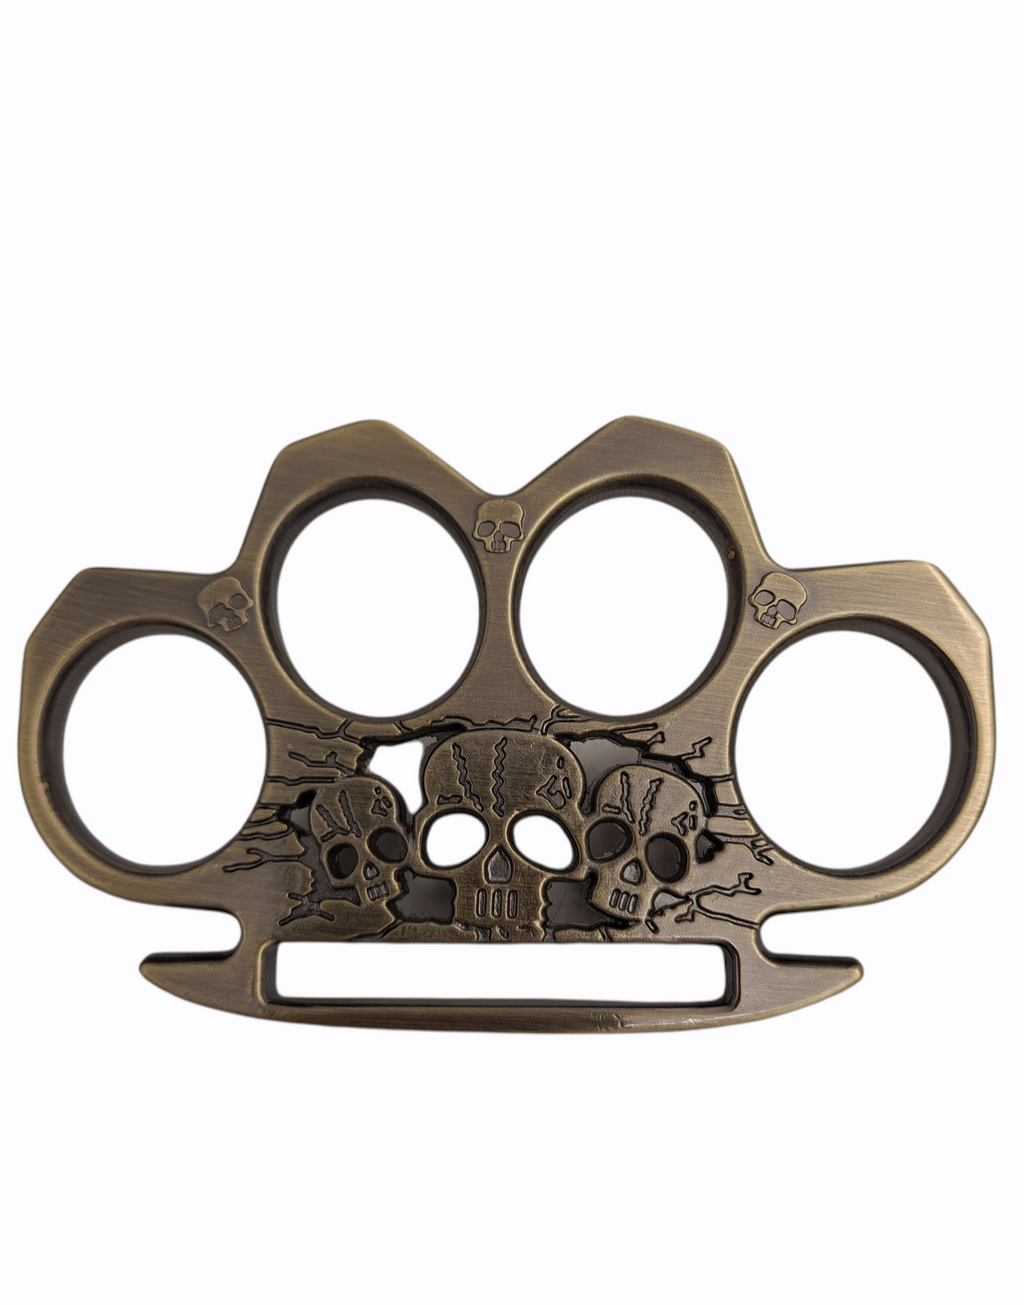 Paper Weight/Brass buckle (antique Brass )